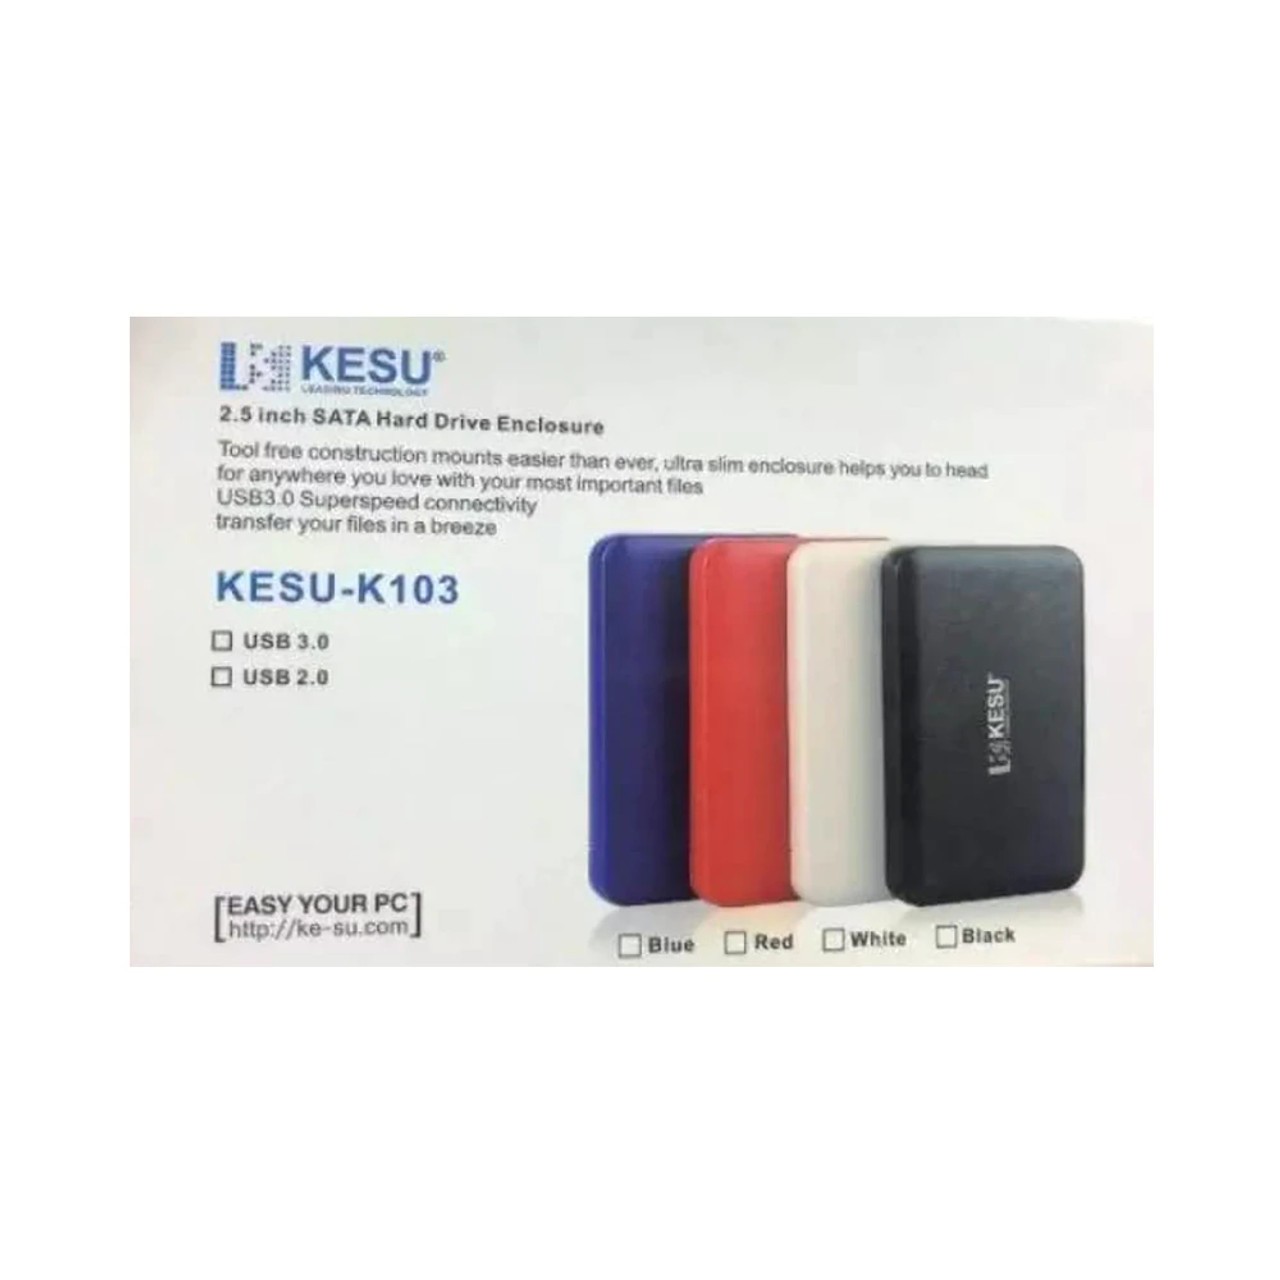 KESU-K103